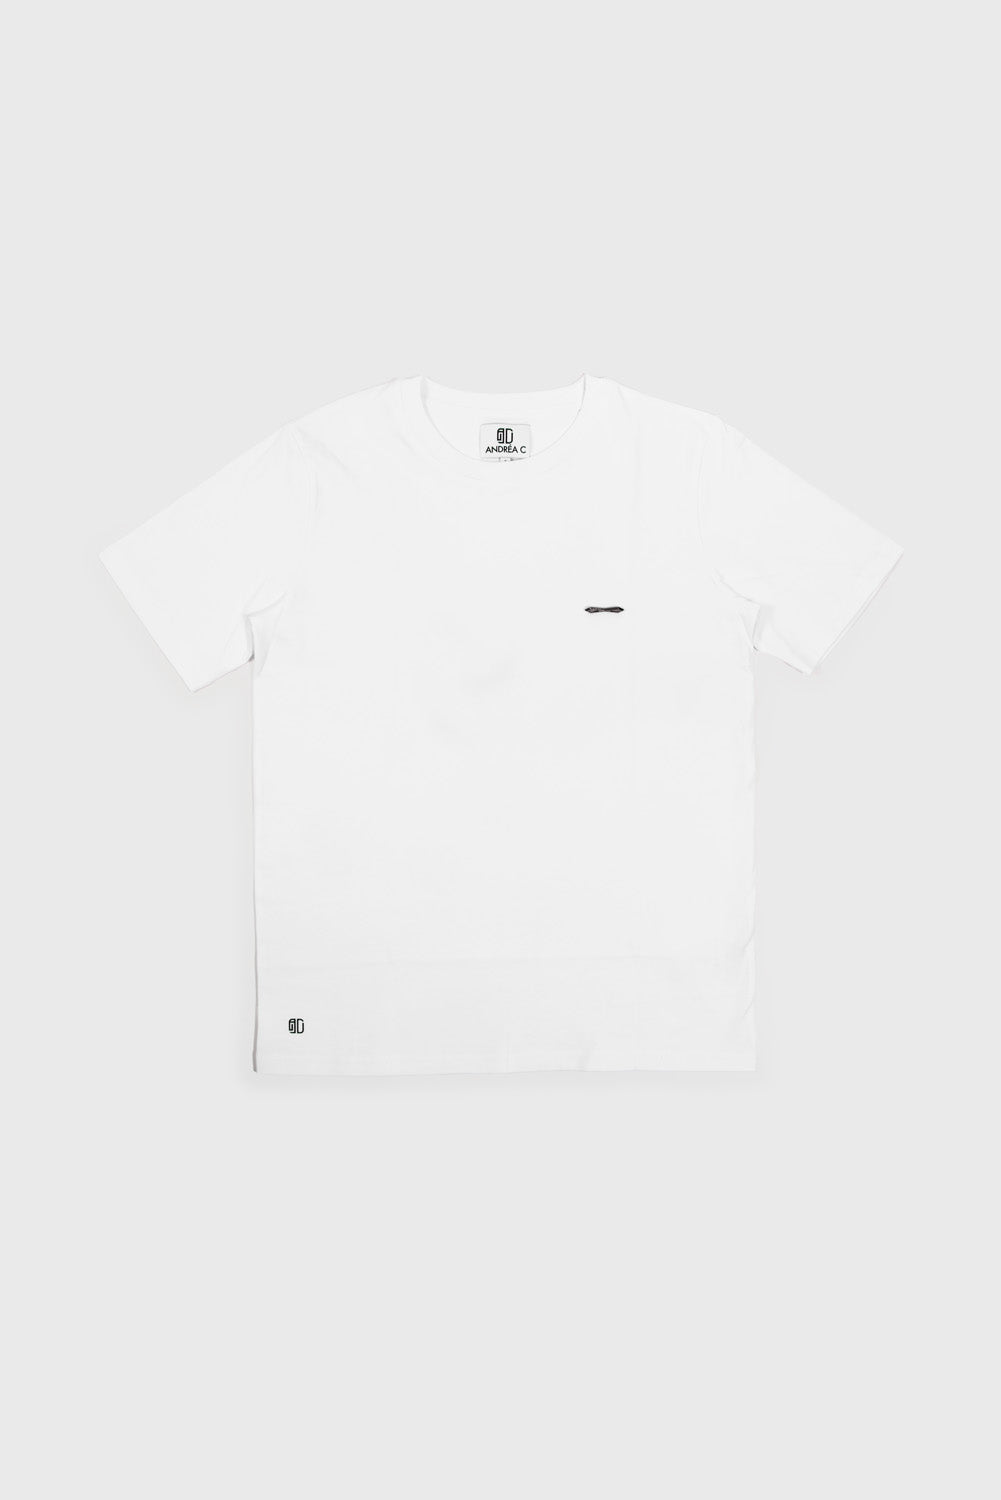 White Axel t-shirt